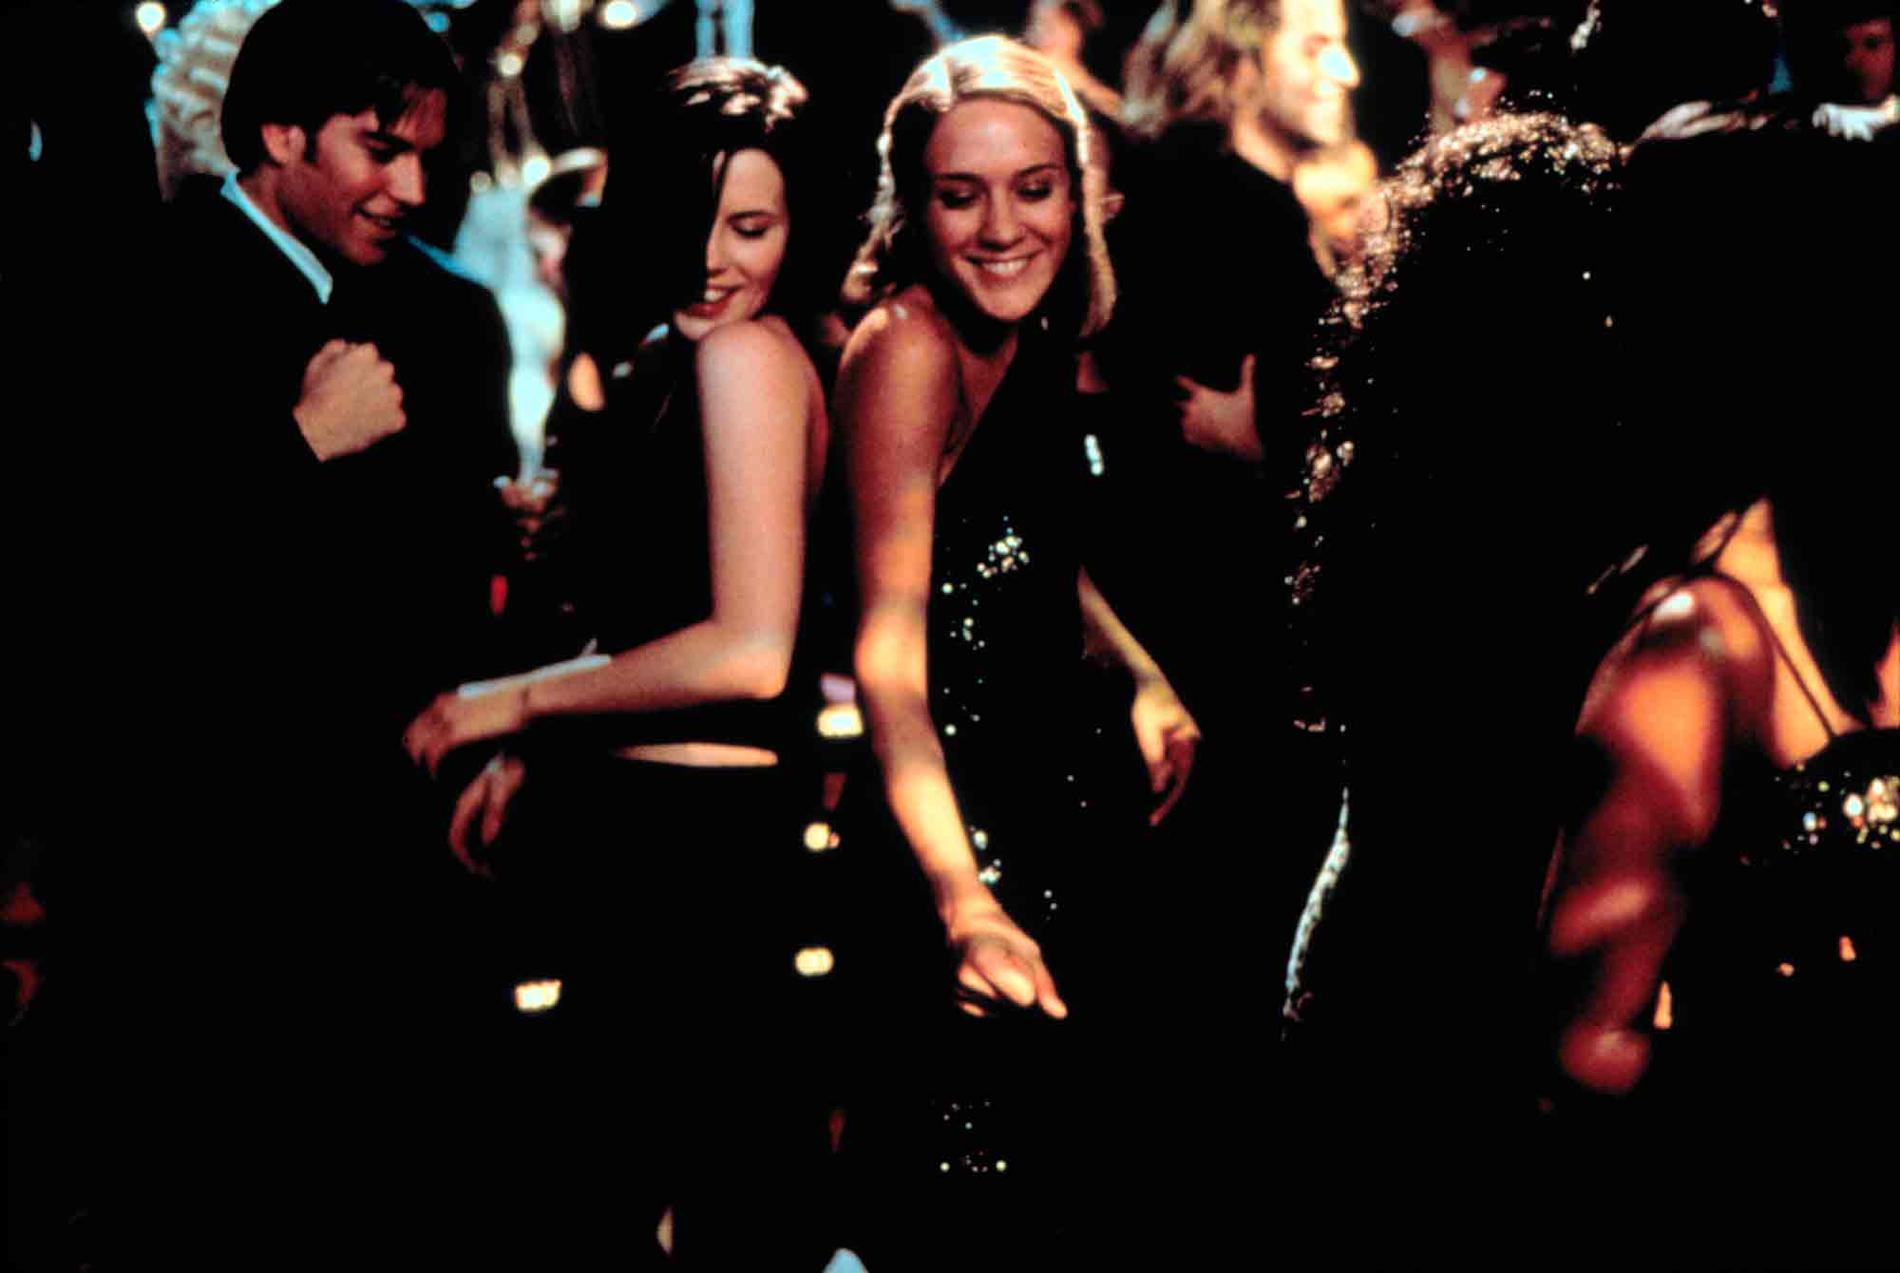 Chloë Sevigny och Kate Beckinsale i filmen ”The last days of disco” från 1998.